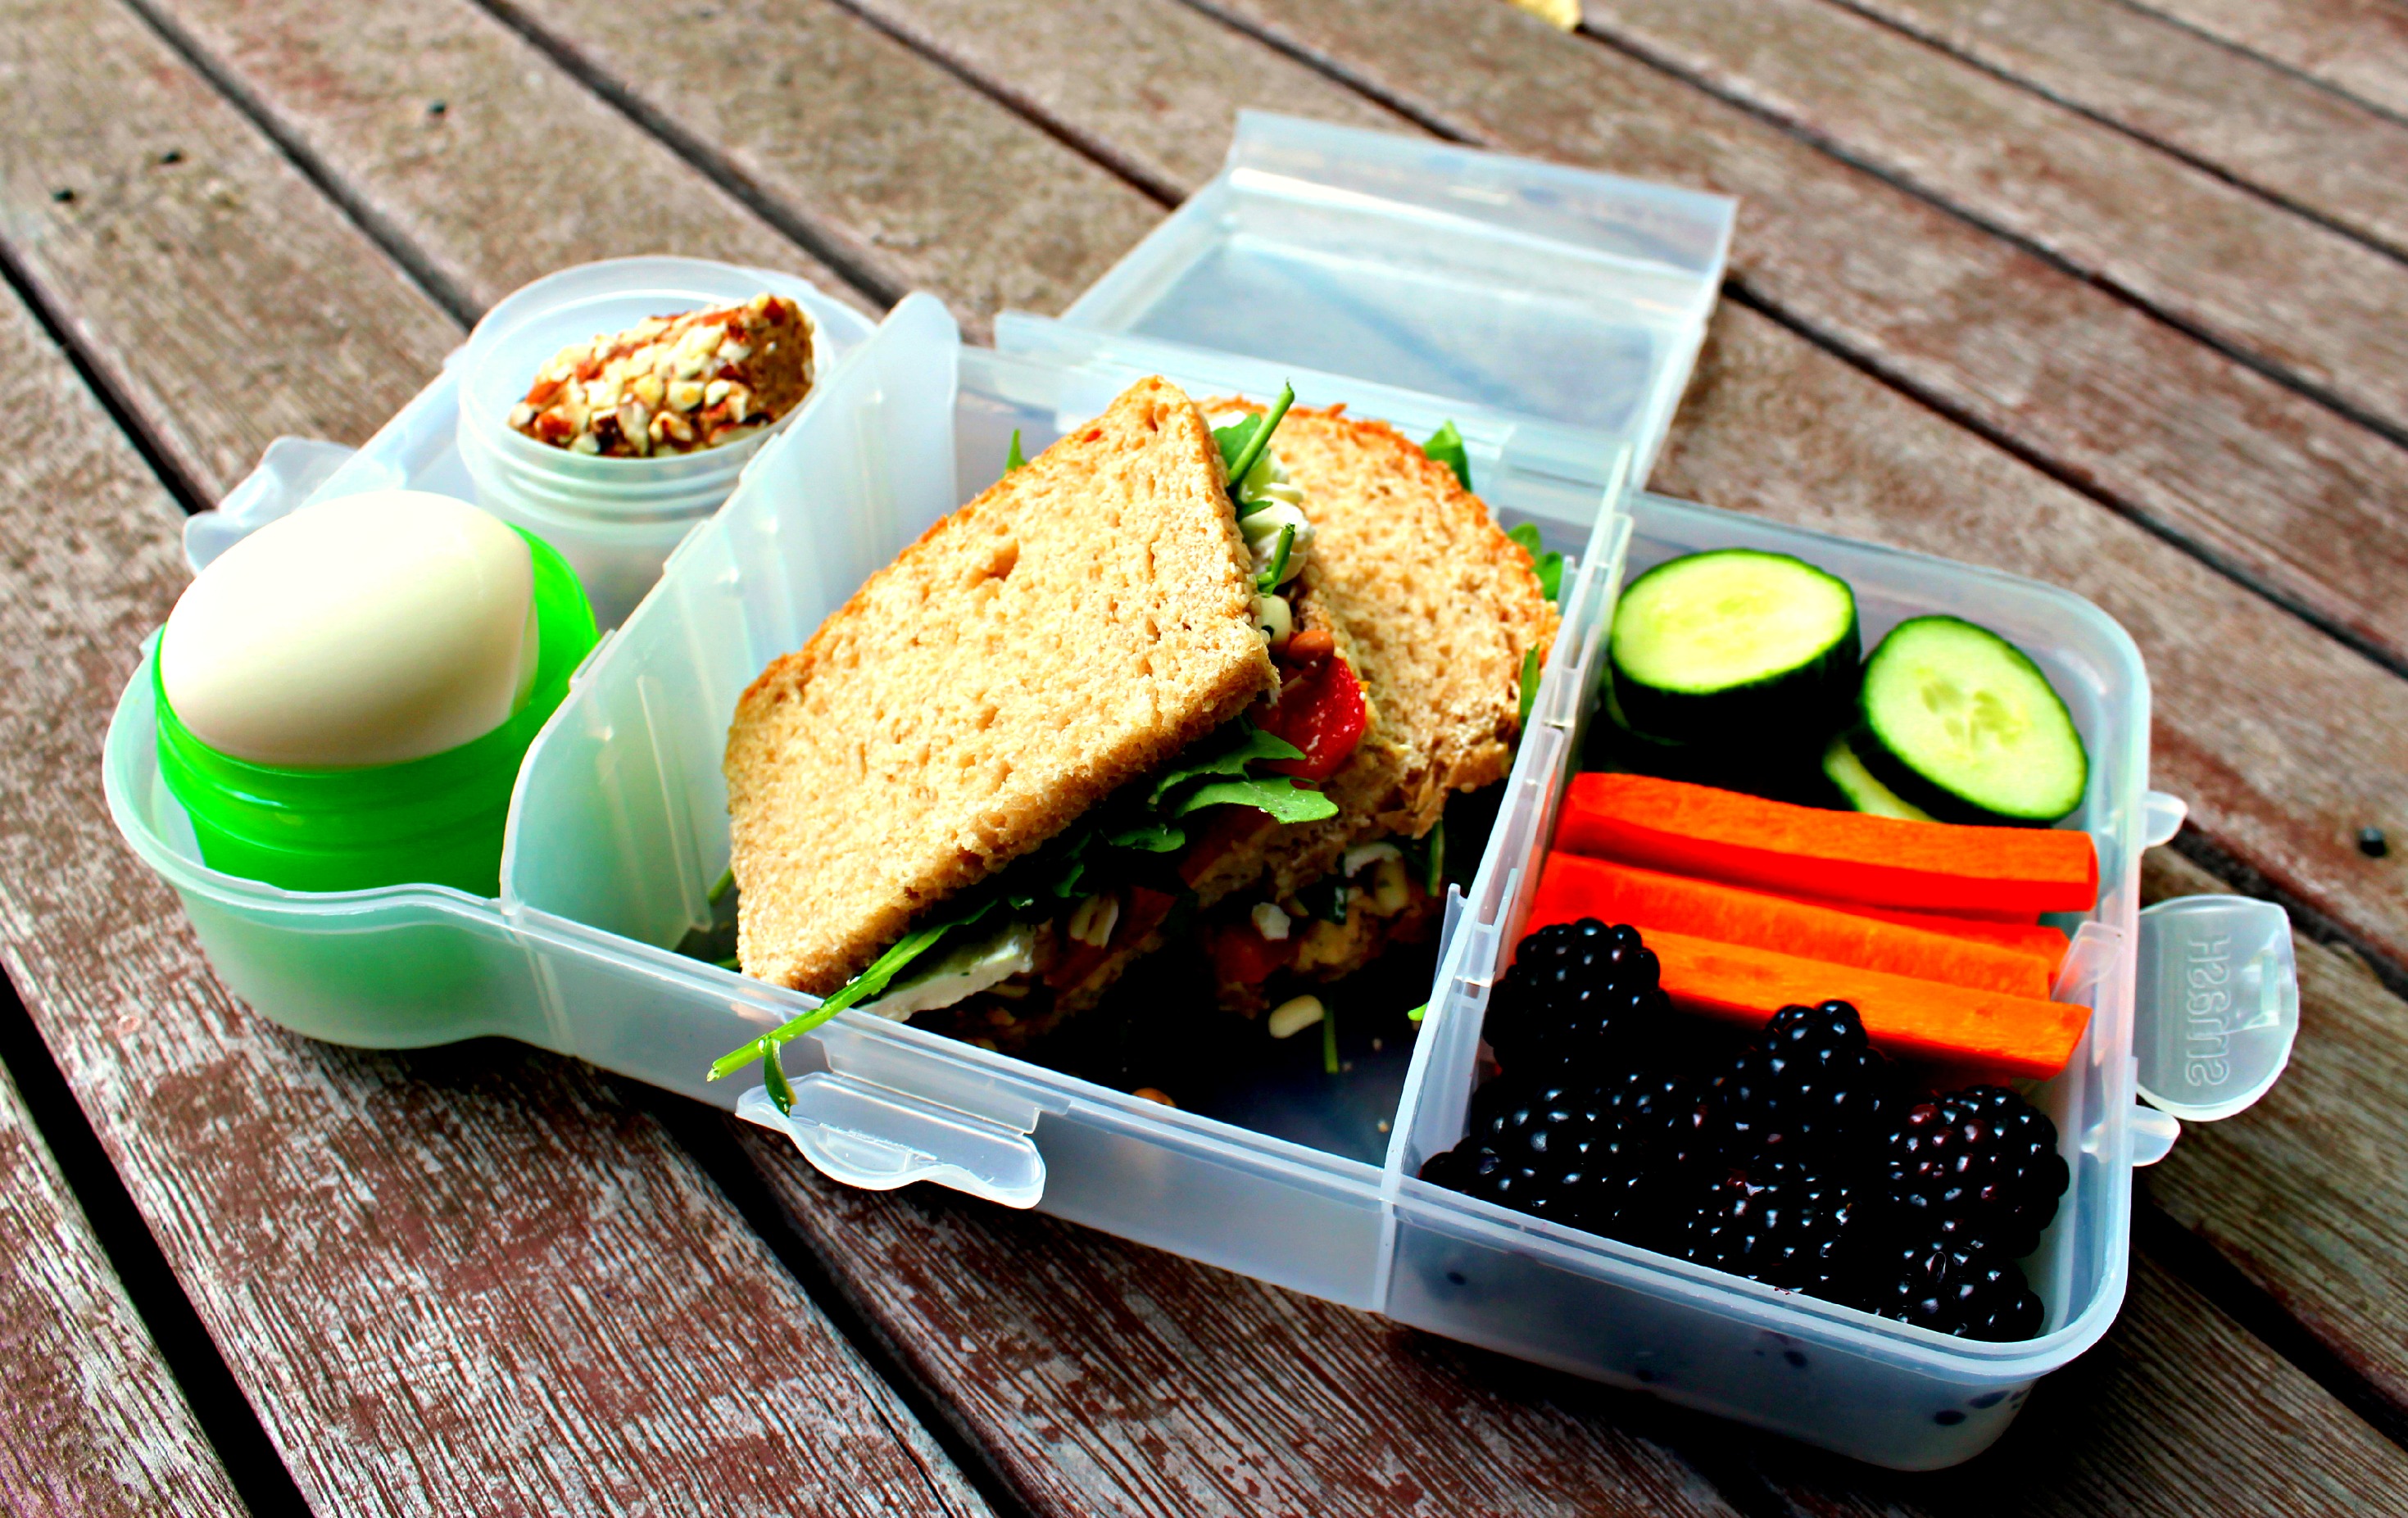 healthy kids lunch box